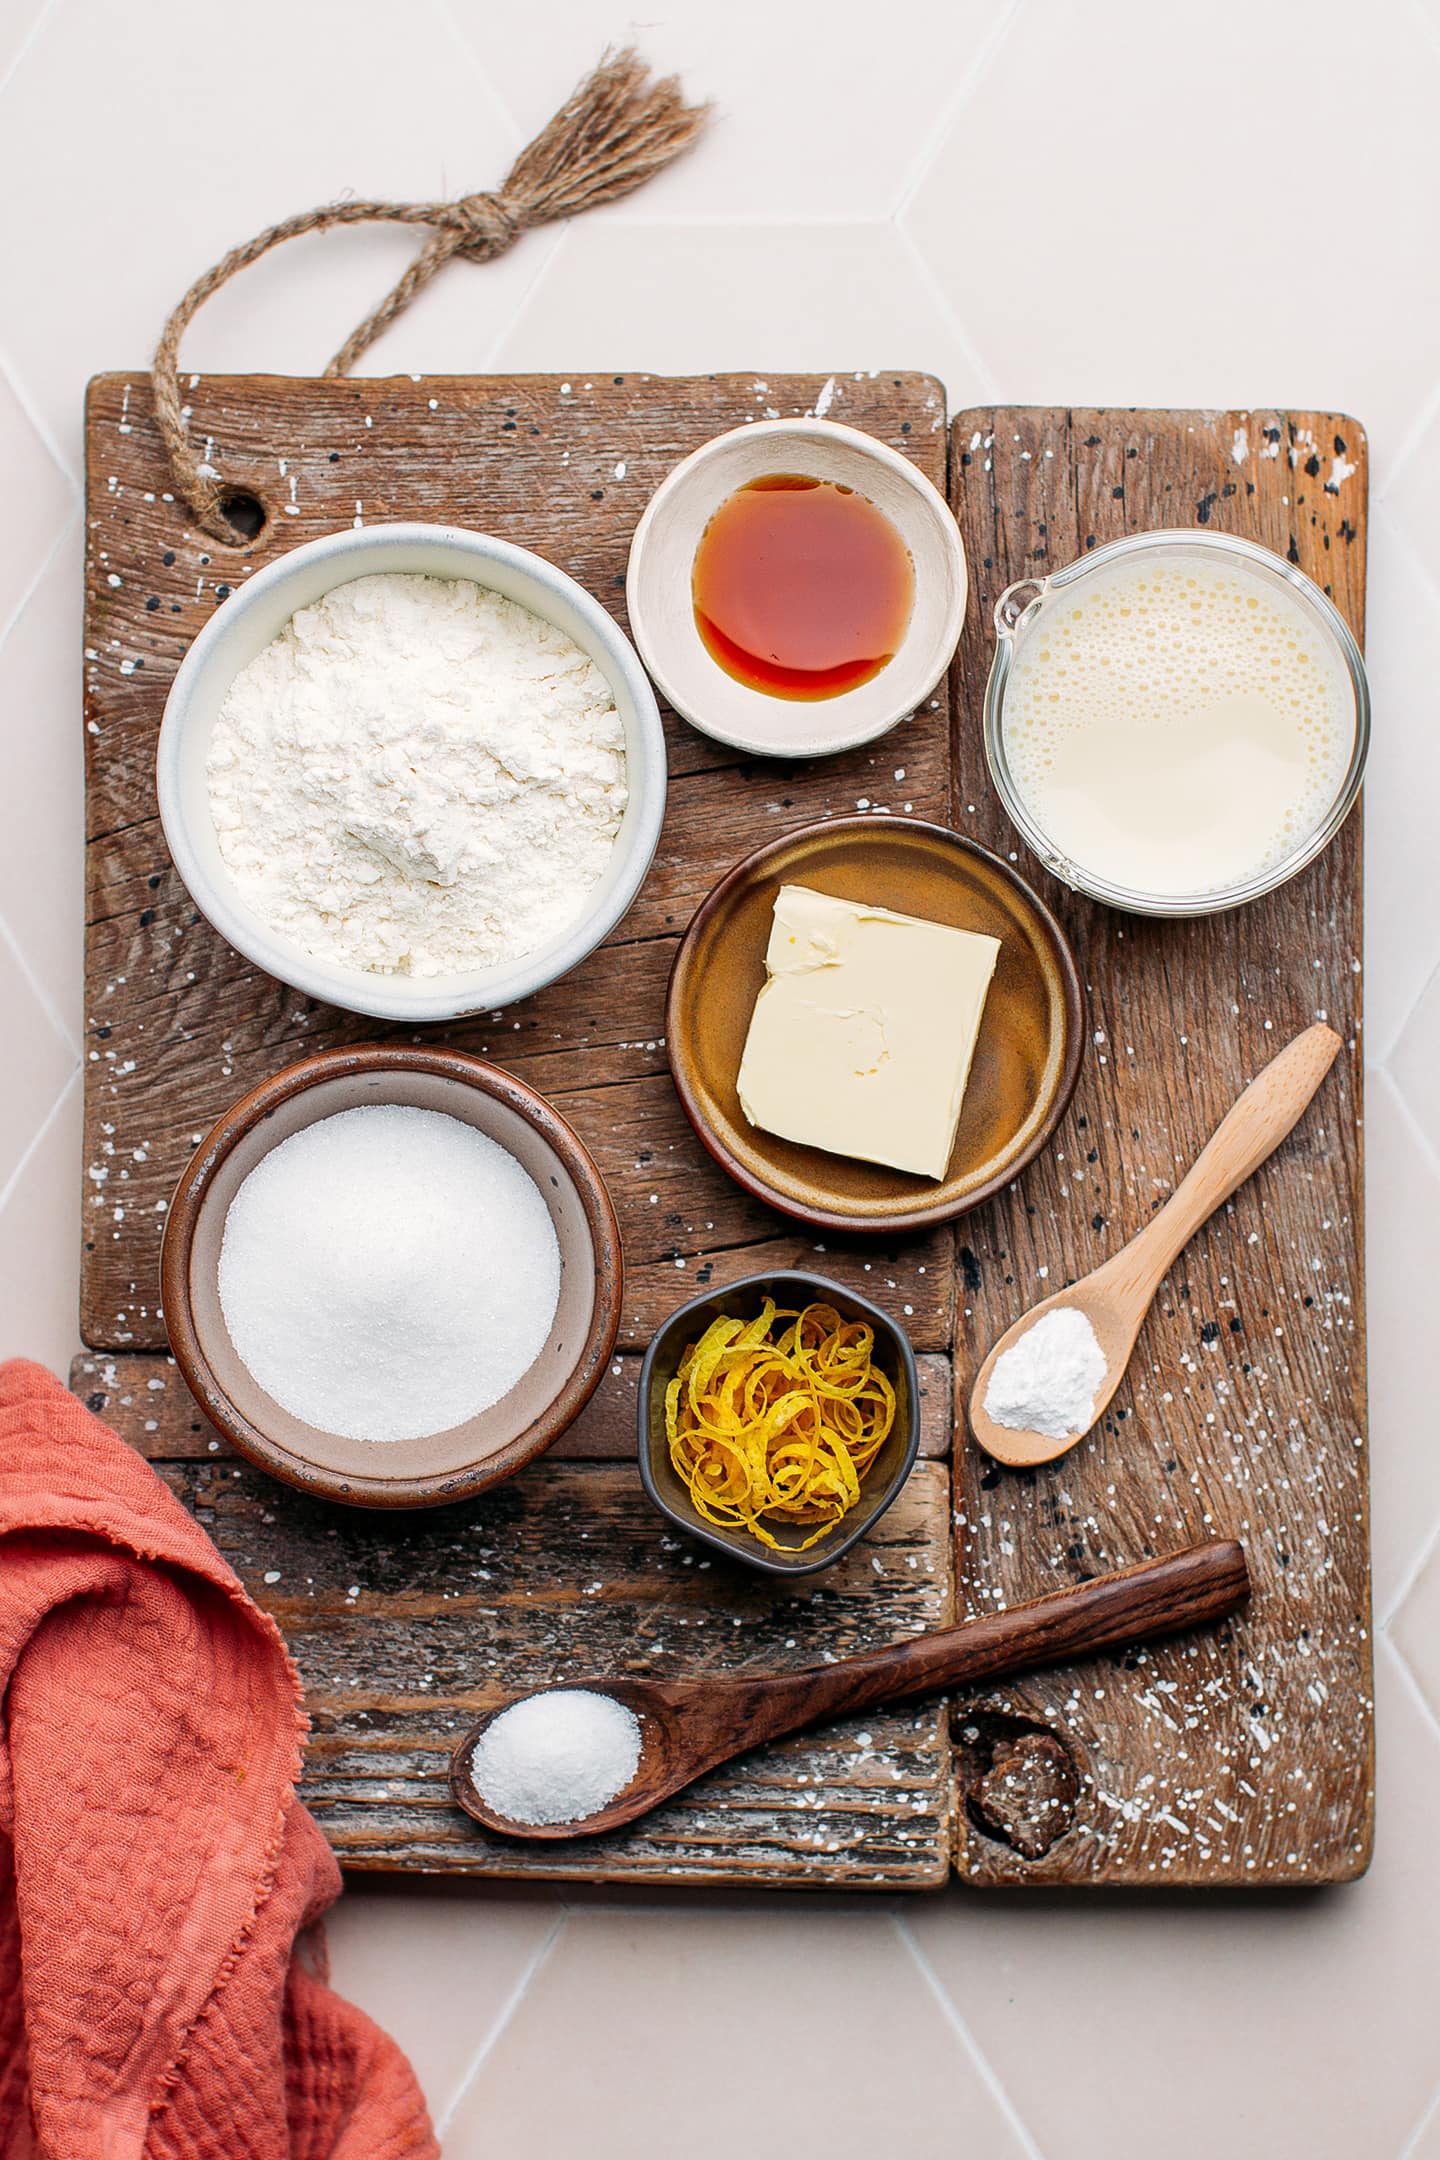 Ingredients like flour, sugar, lemon zest, butter, and almond milk.